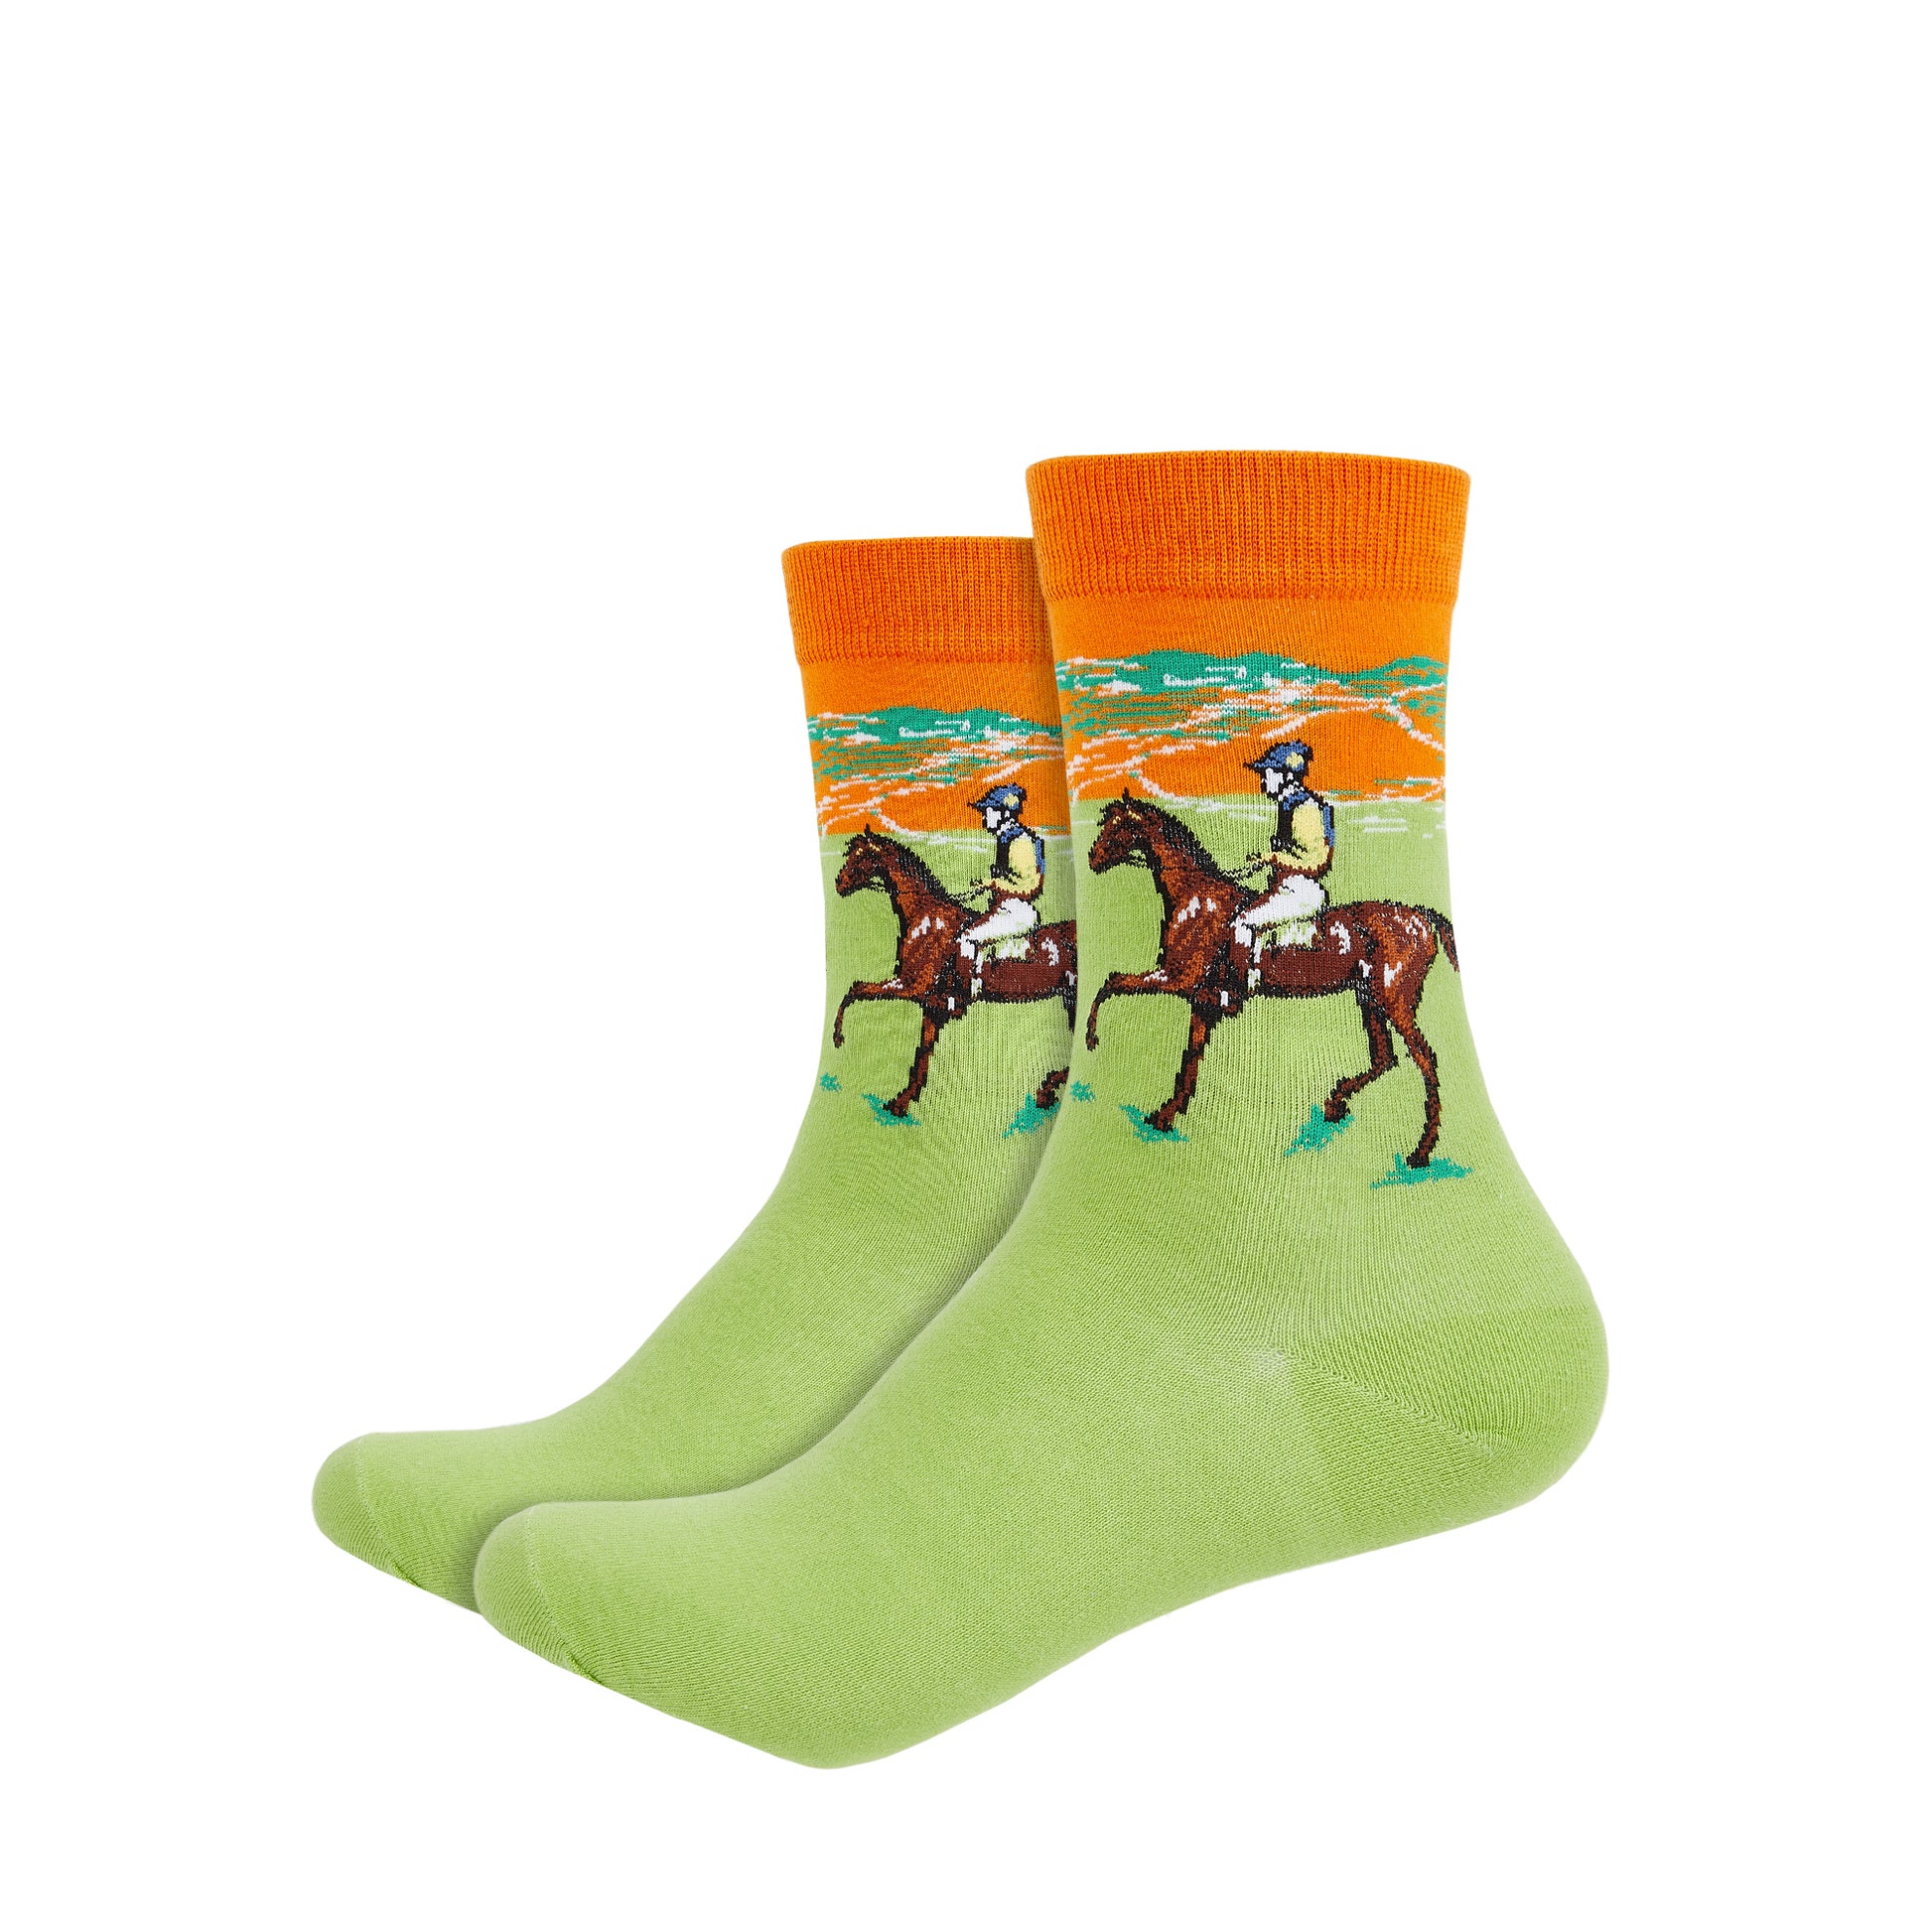 Degas Horses Printed Quarter Length Socks - IDENTITY Apparel Shop